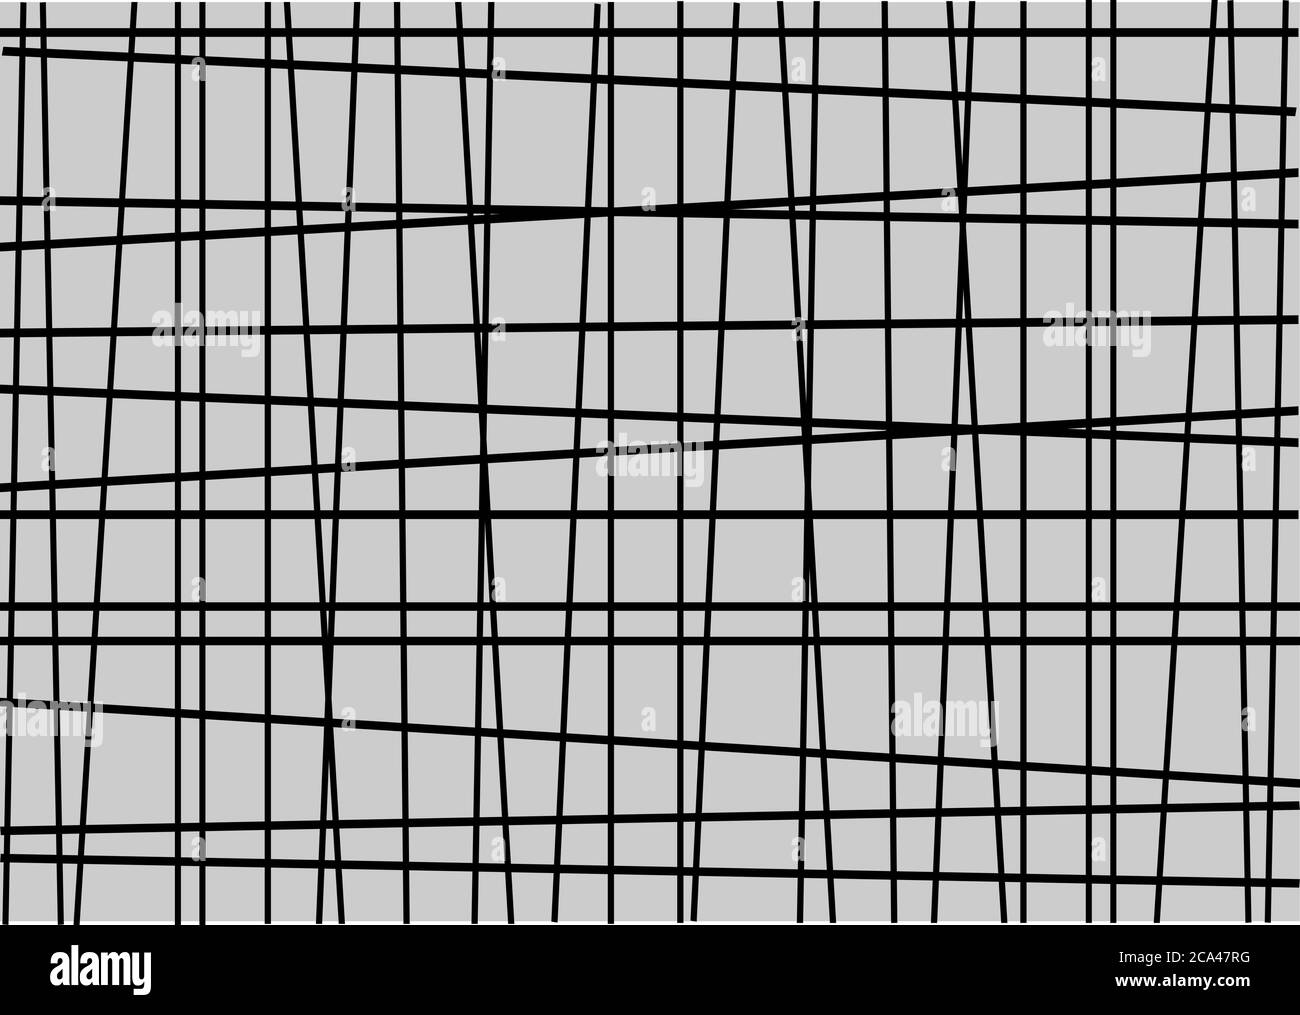 irregular black lines on grey backdrop. Vector illustration. Stock Photo